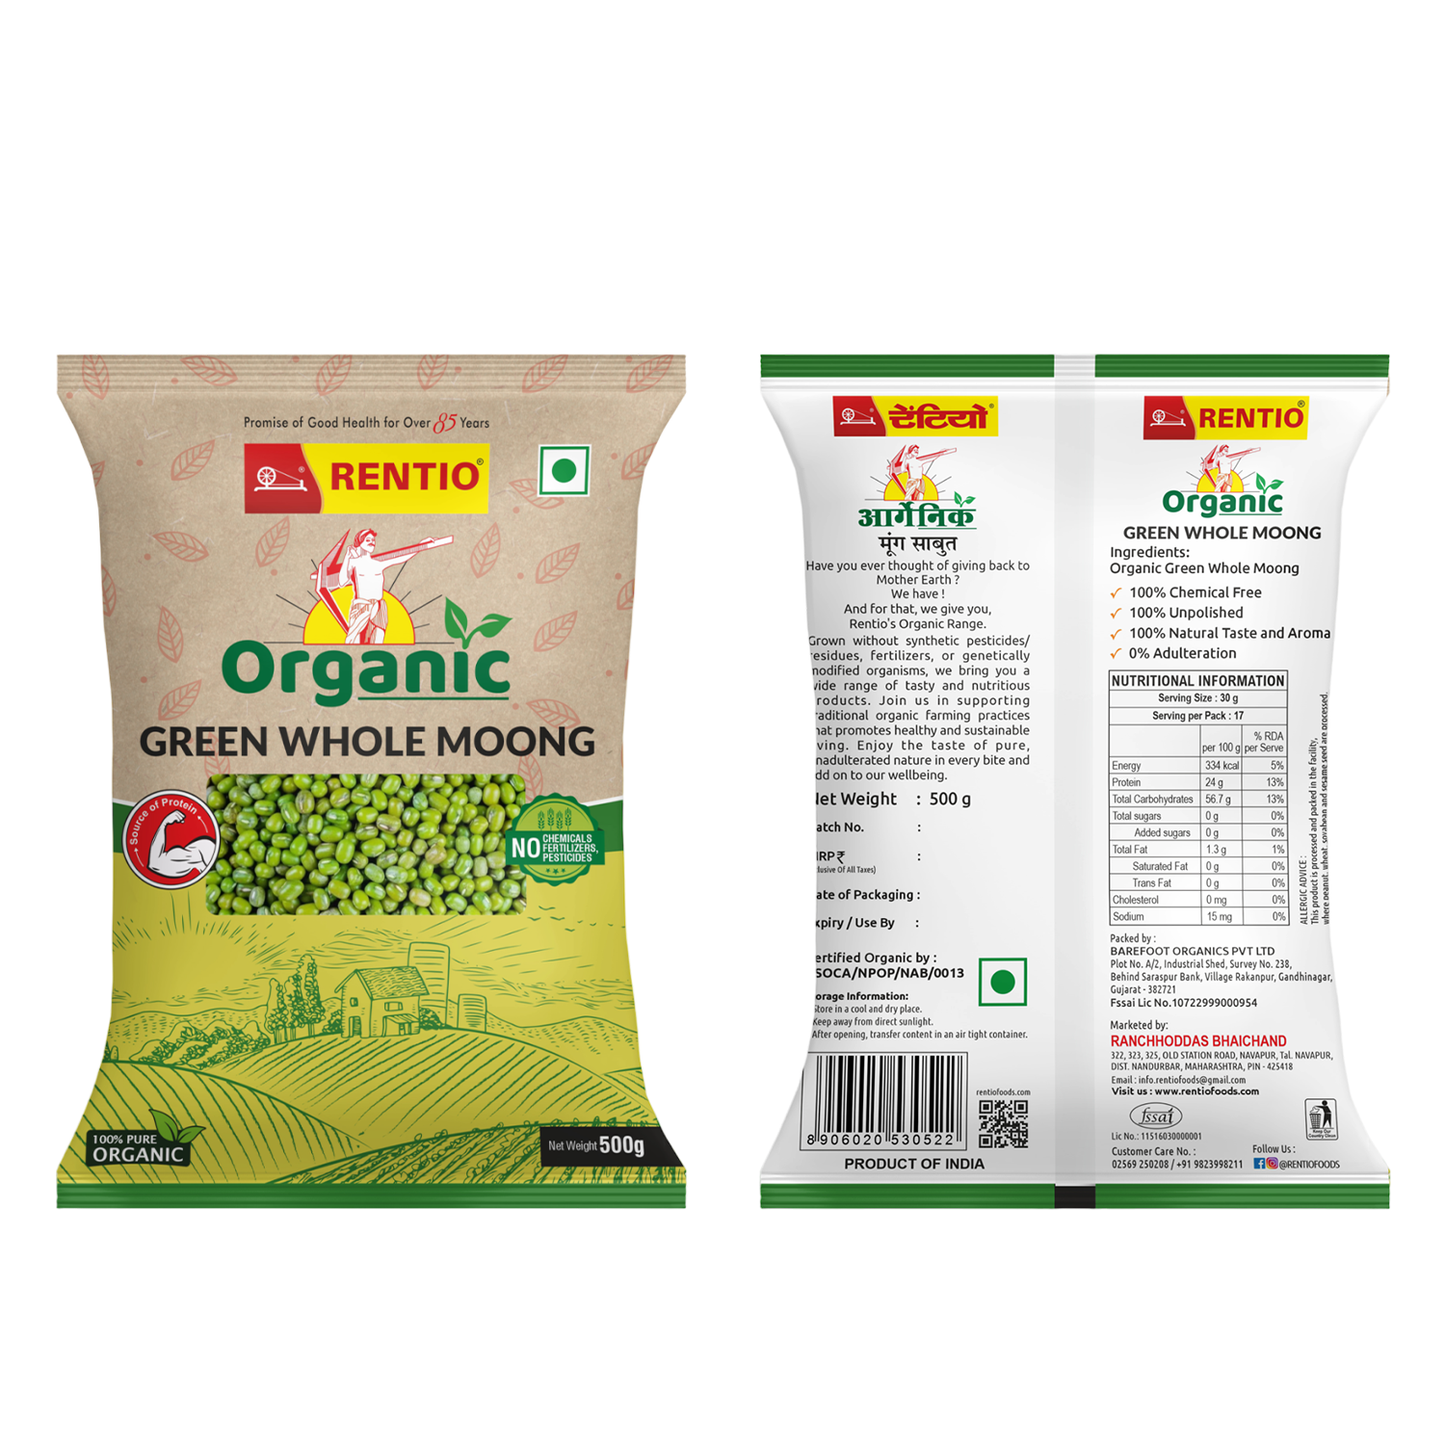 RENTIO Organic Toor dal (500g) + Organic Green Whole Moong (500g) Combo